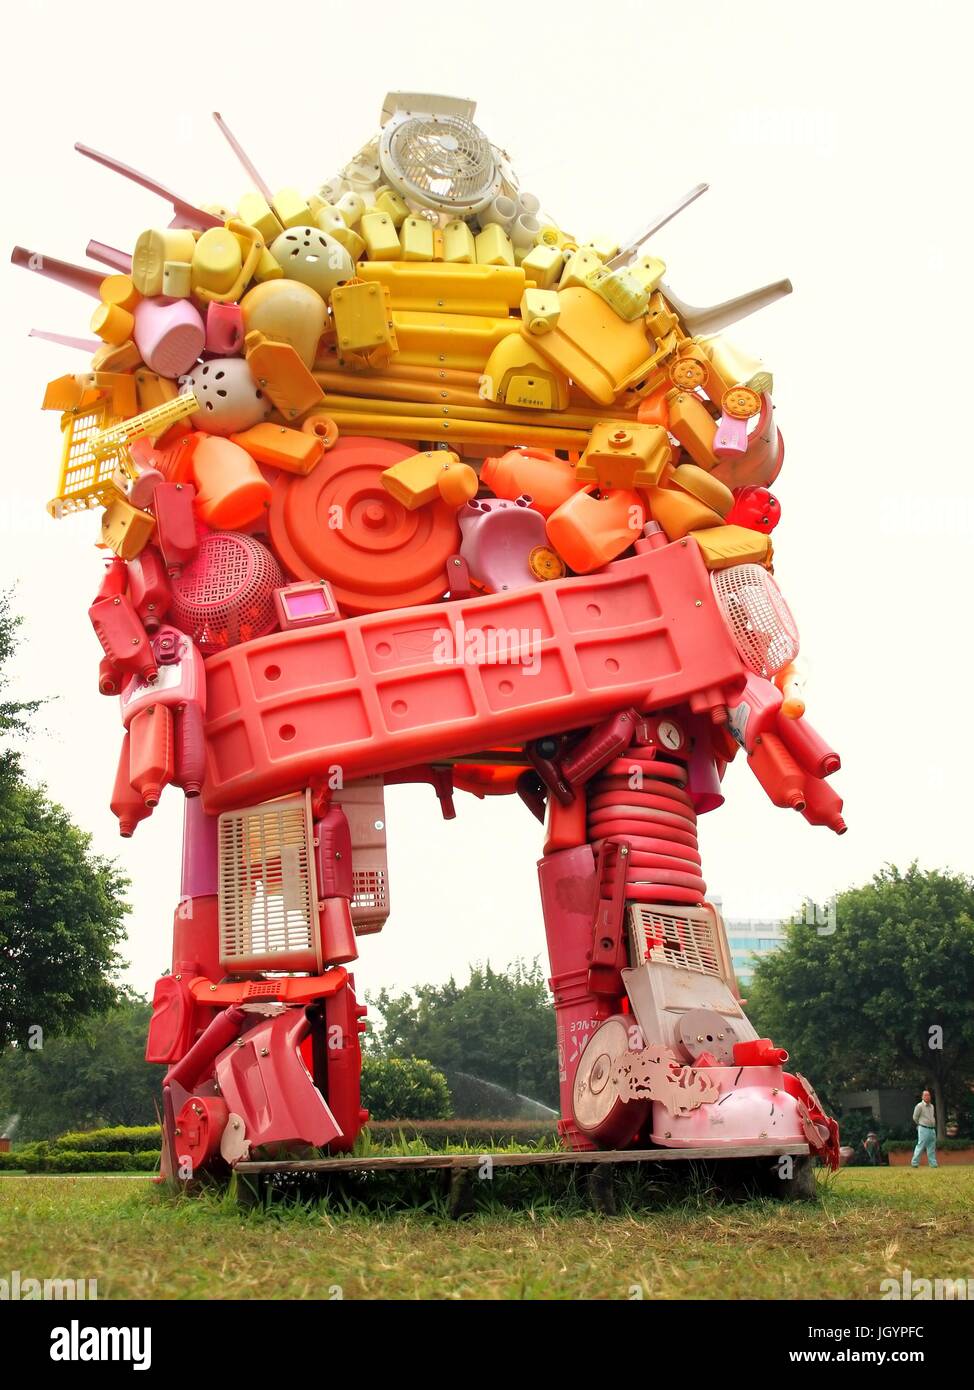 KAOHSIUNG, TAIWAN, Dezember 10: Zur Förderung Evironmental Bewusstseins zeigt das National Science Museum Skulpturen aus Plastikmüll auf seine groun Stockfoto